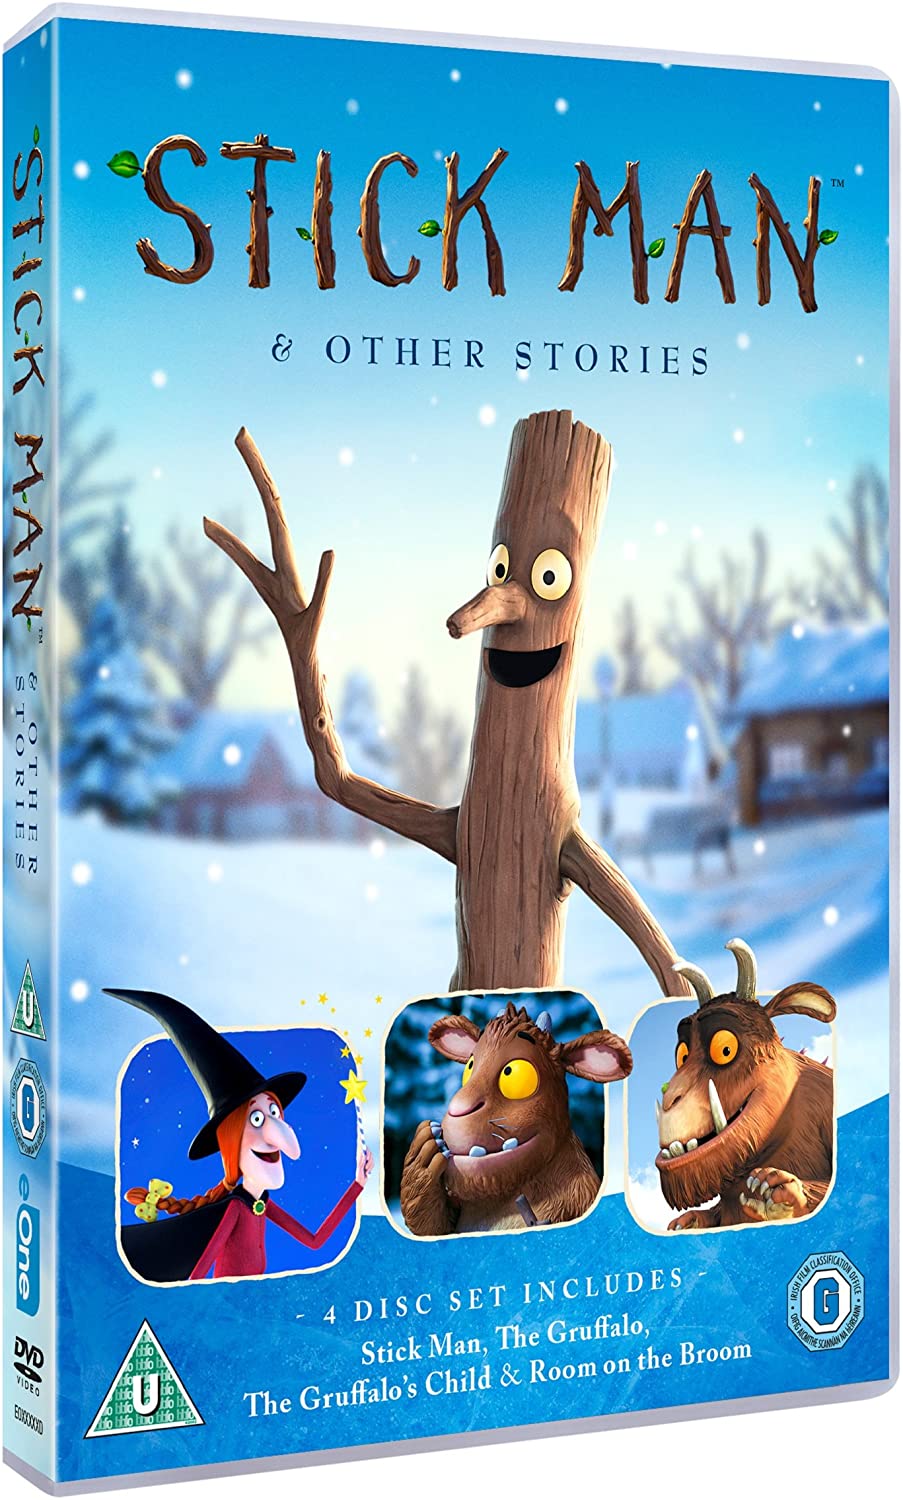 Stick Man e altre storie [DVD] [2017]